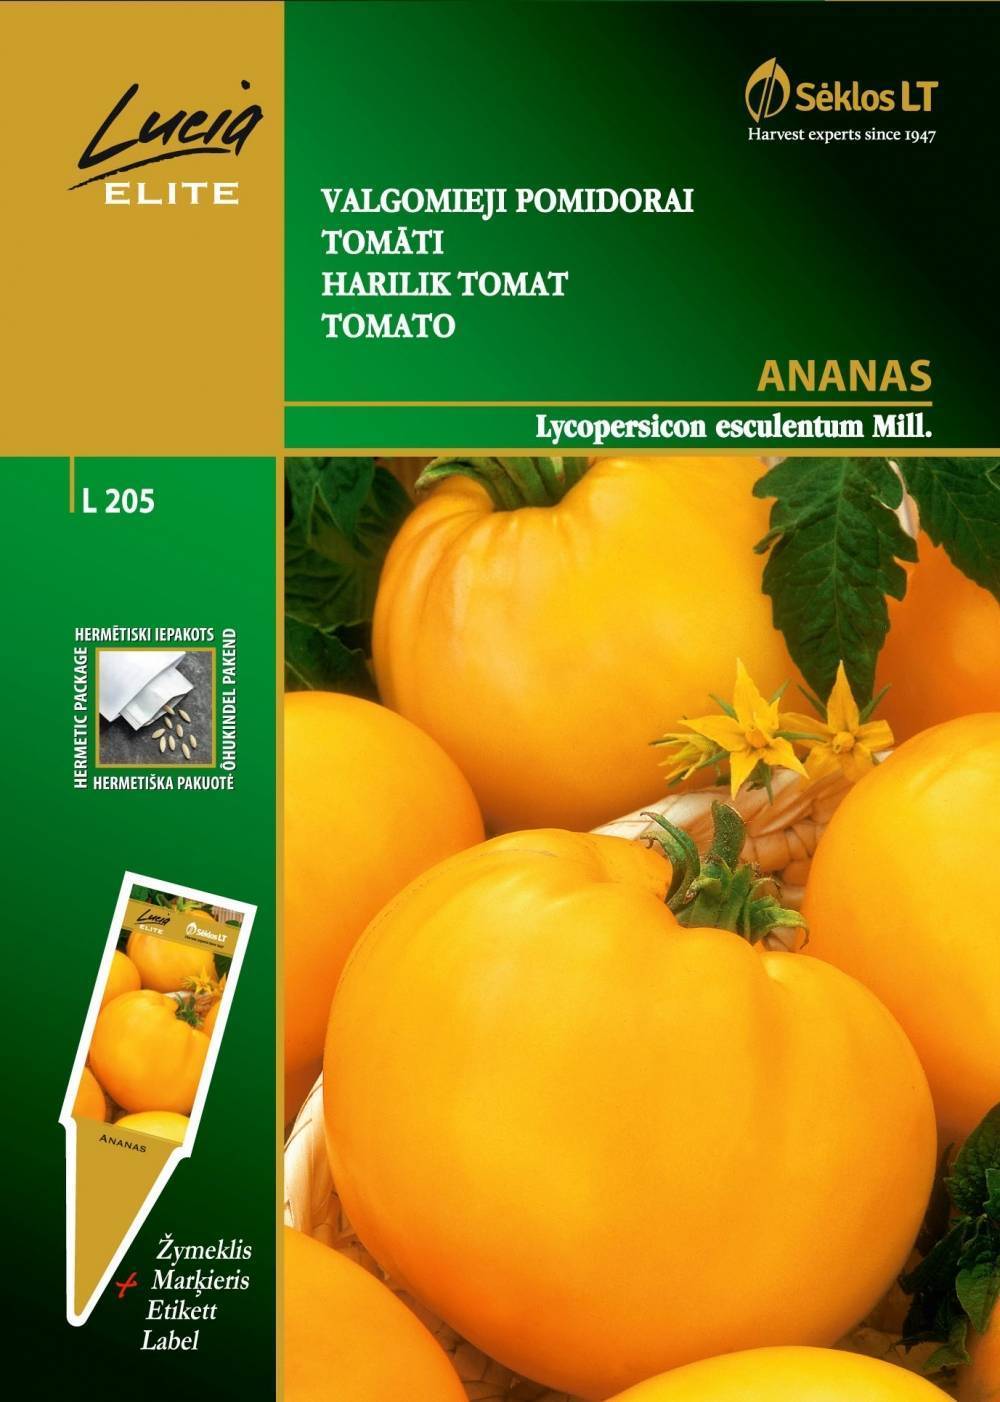 Описание томата Гавайский ананас, характеристики и правила выращивания в теплице